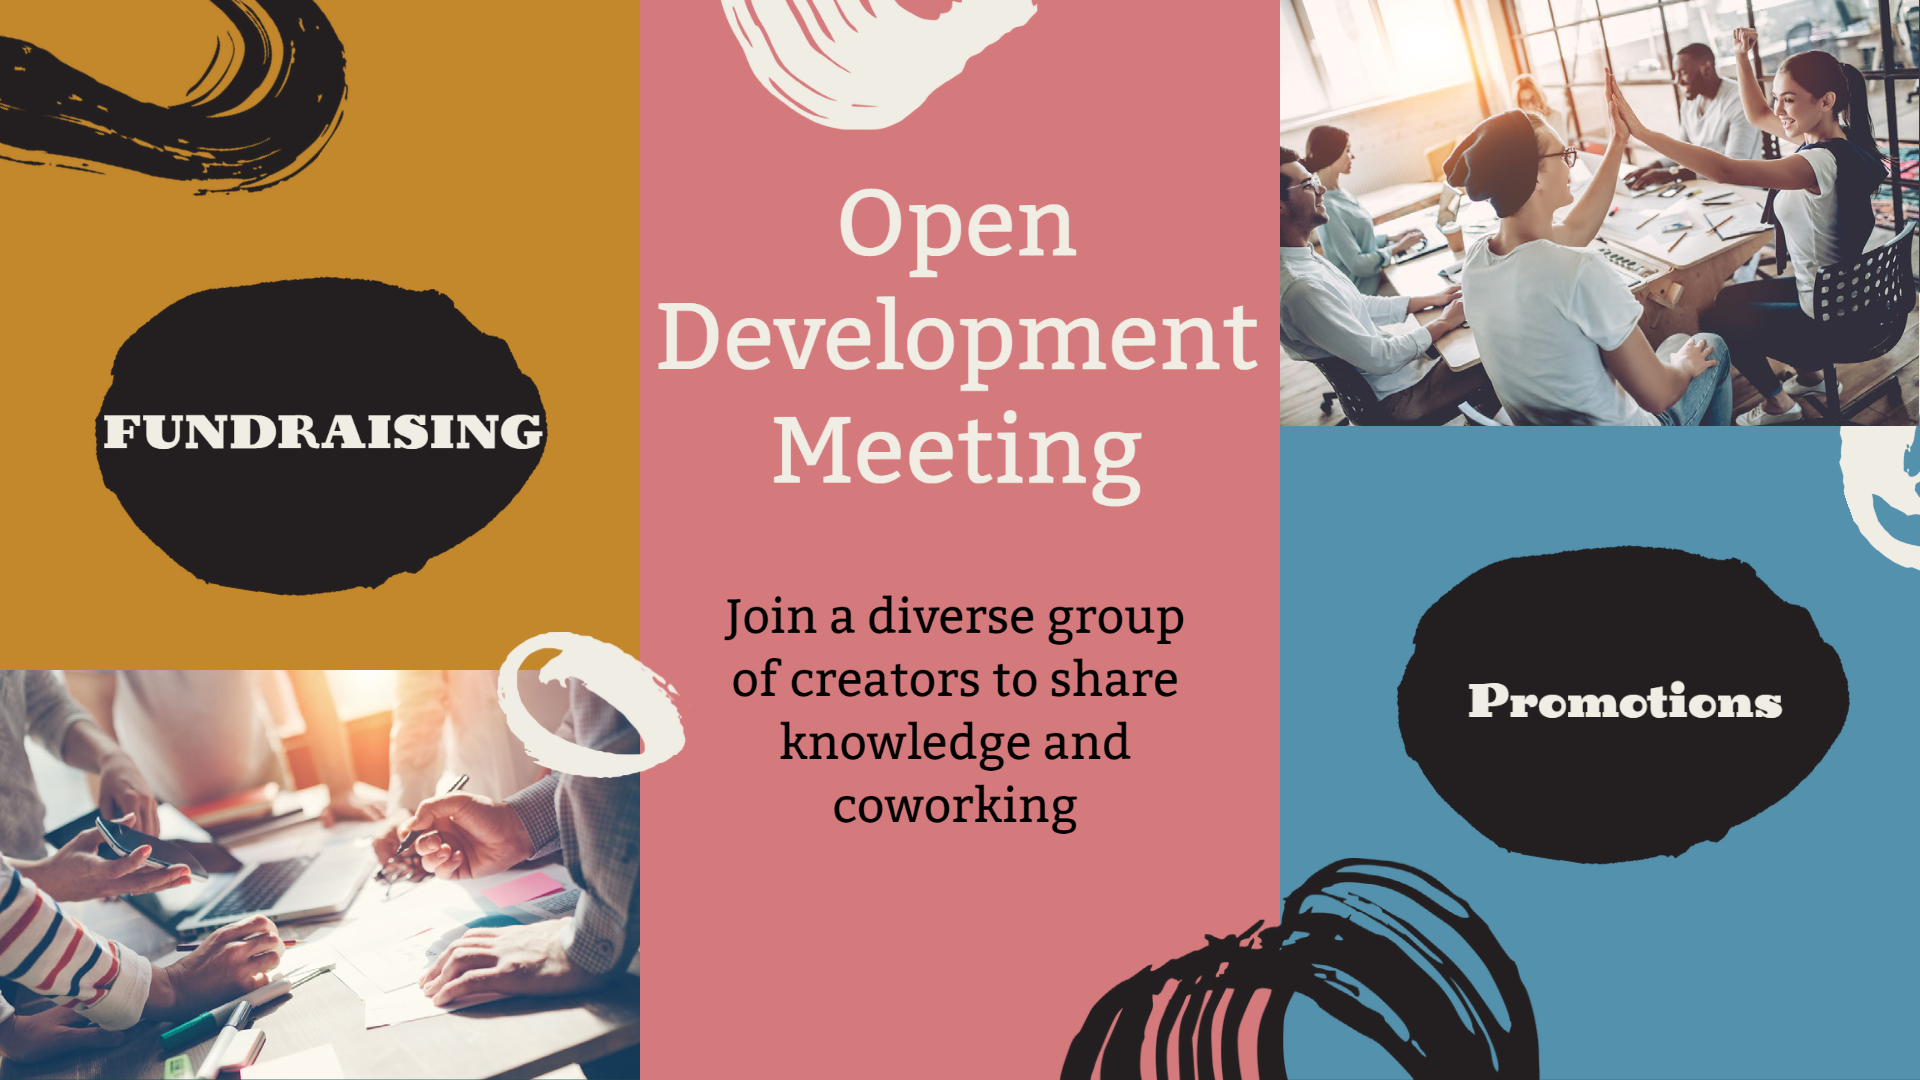 Open Development meeting graphic